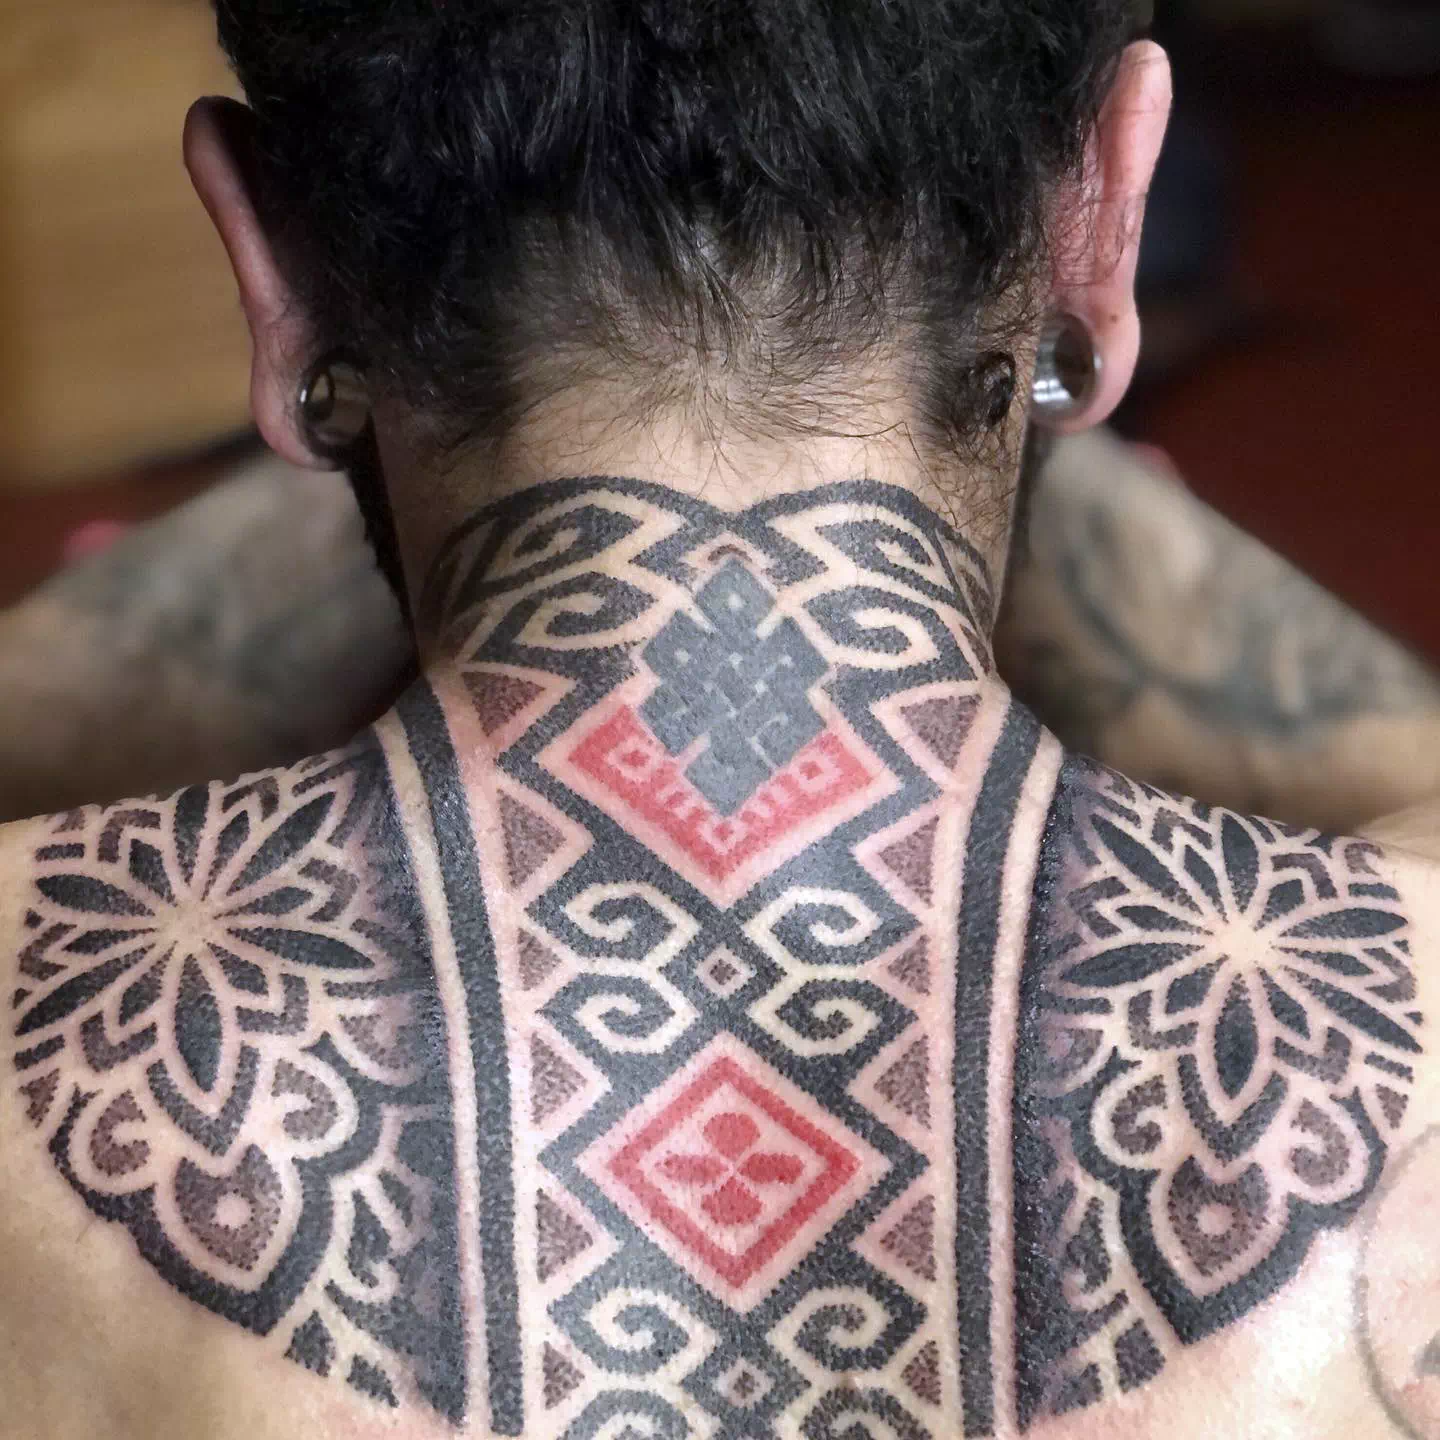 Back neck tattoo 6